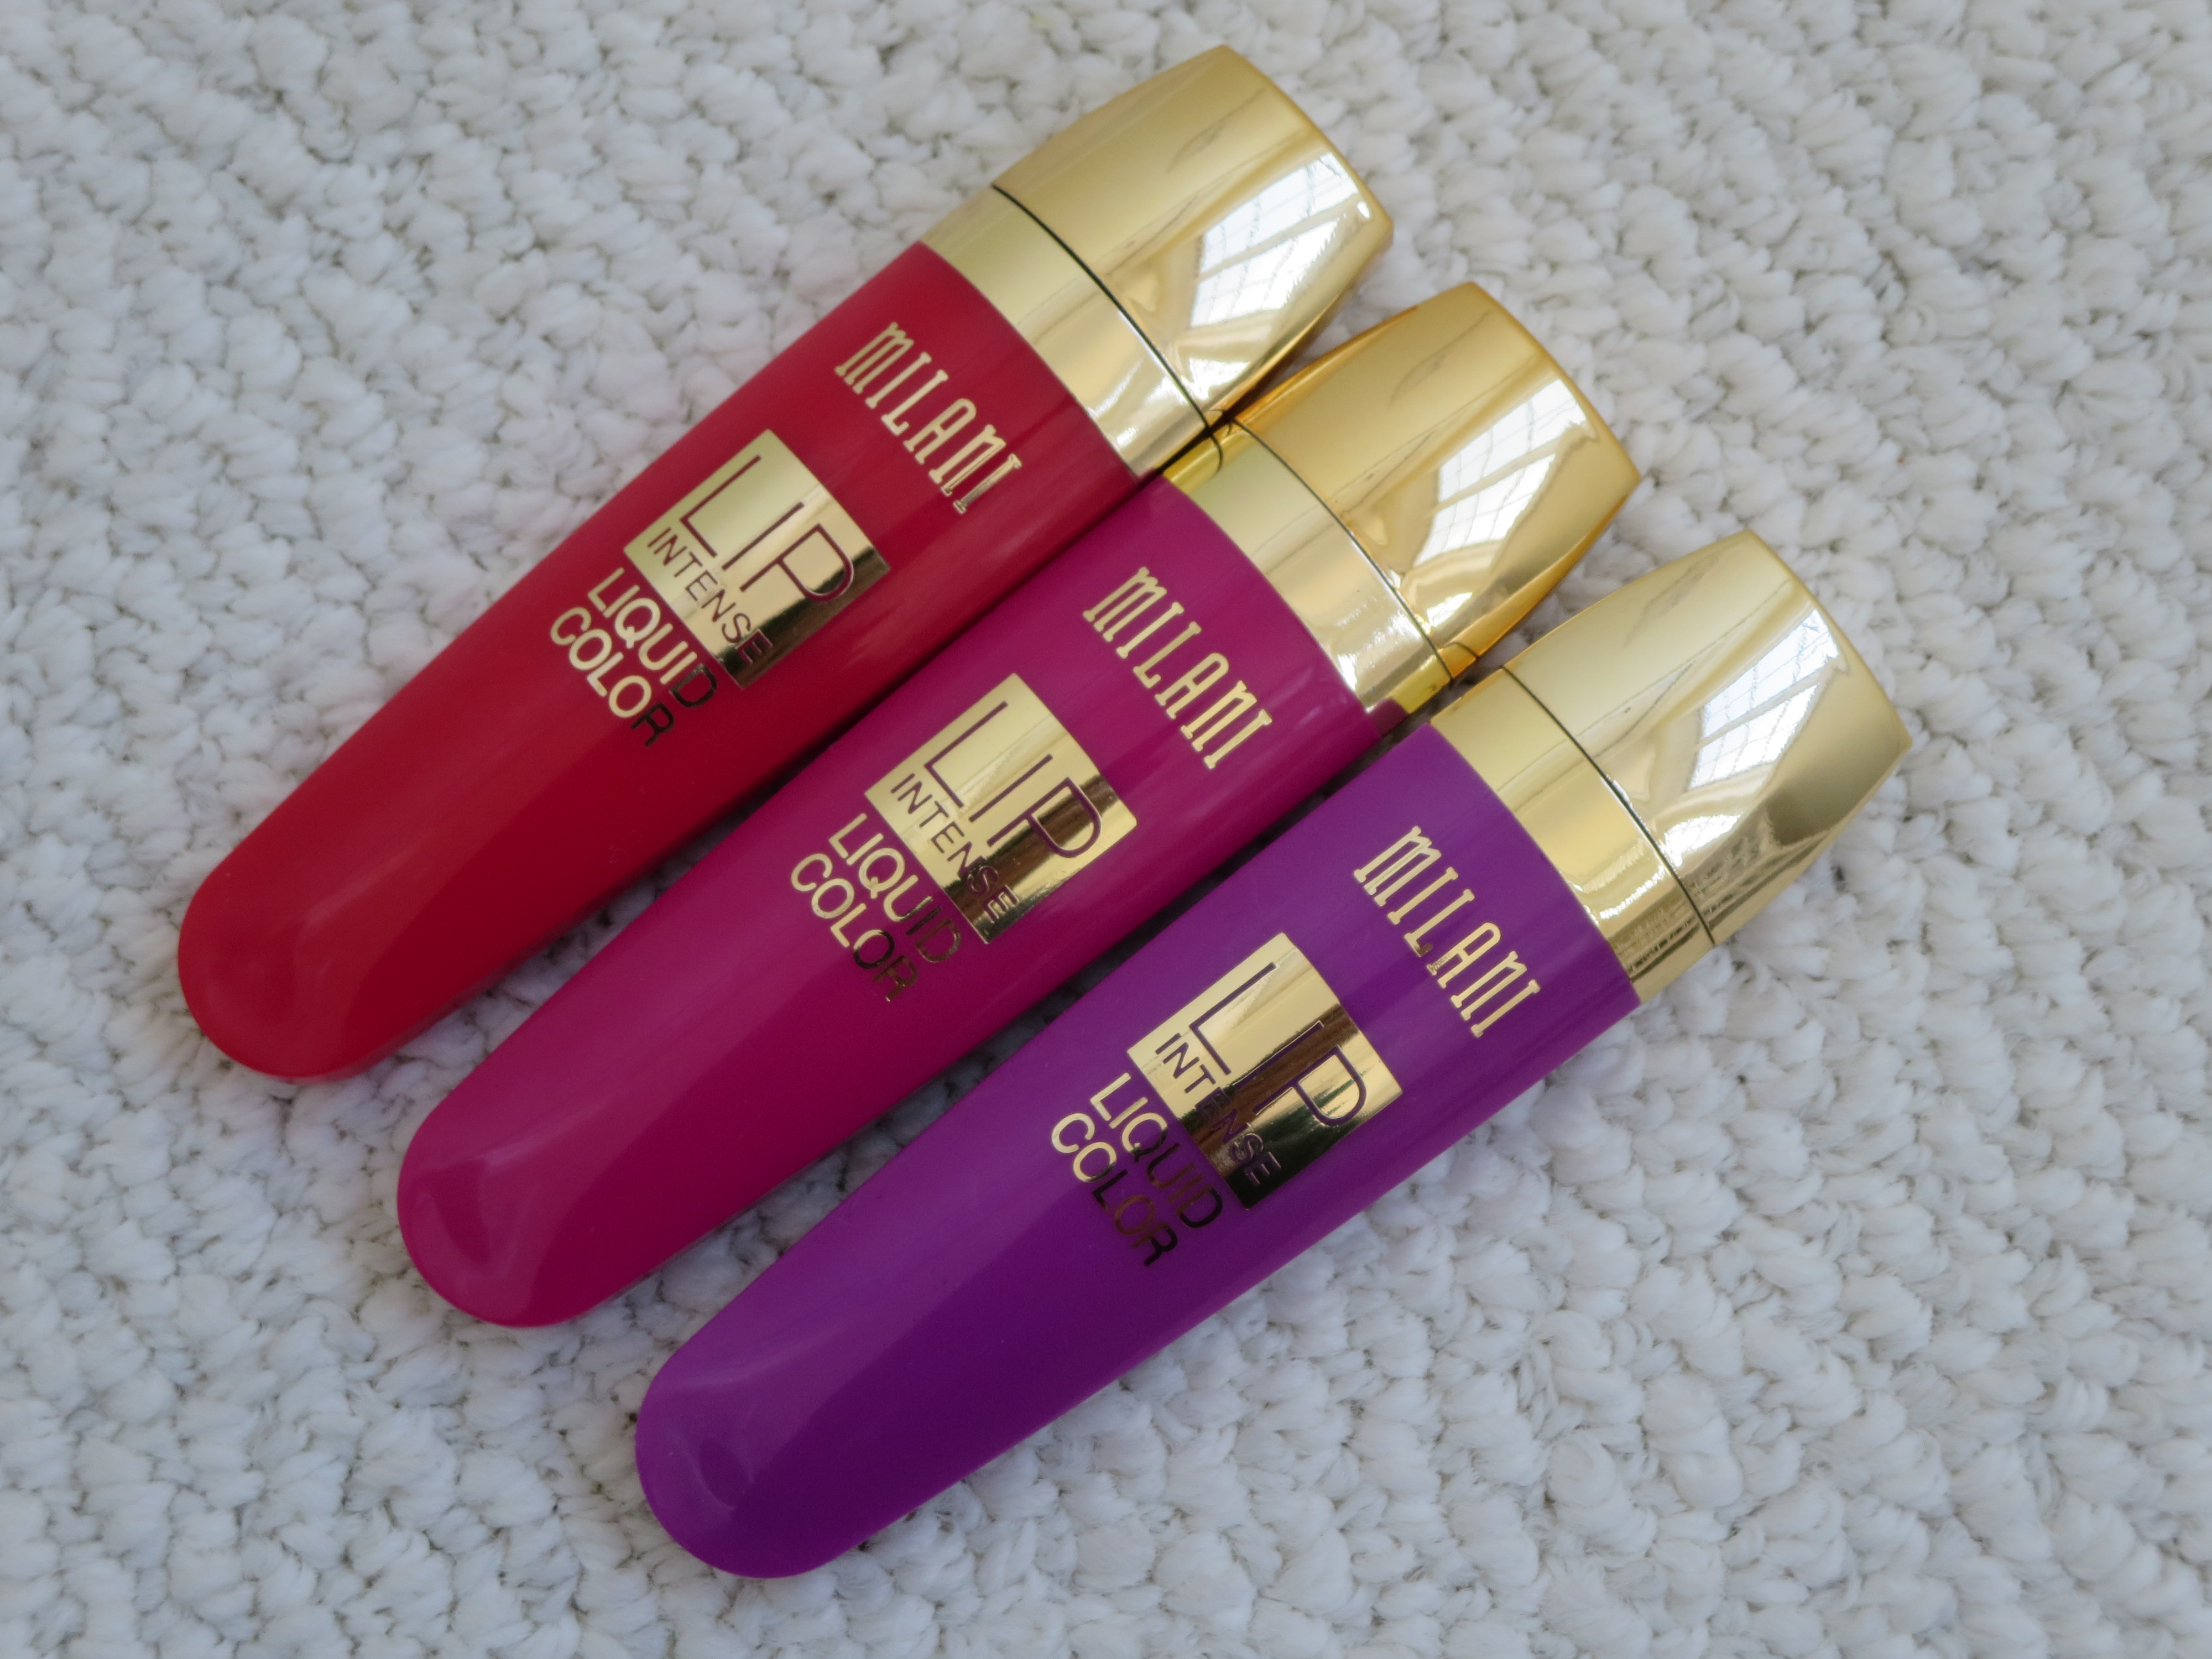 an intense review of milani u2019s lip intense liquid color shades